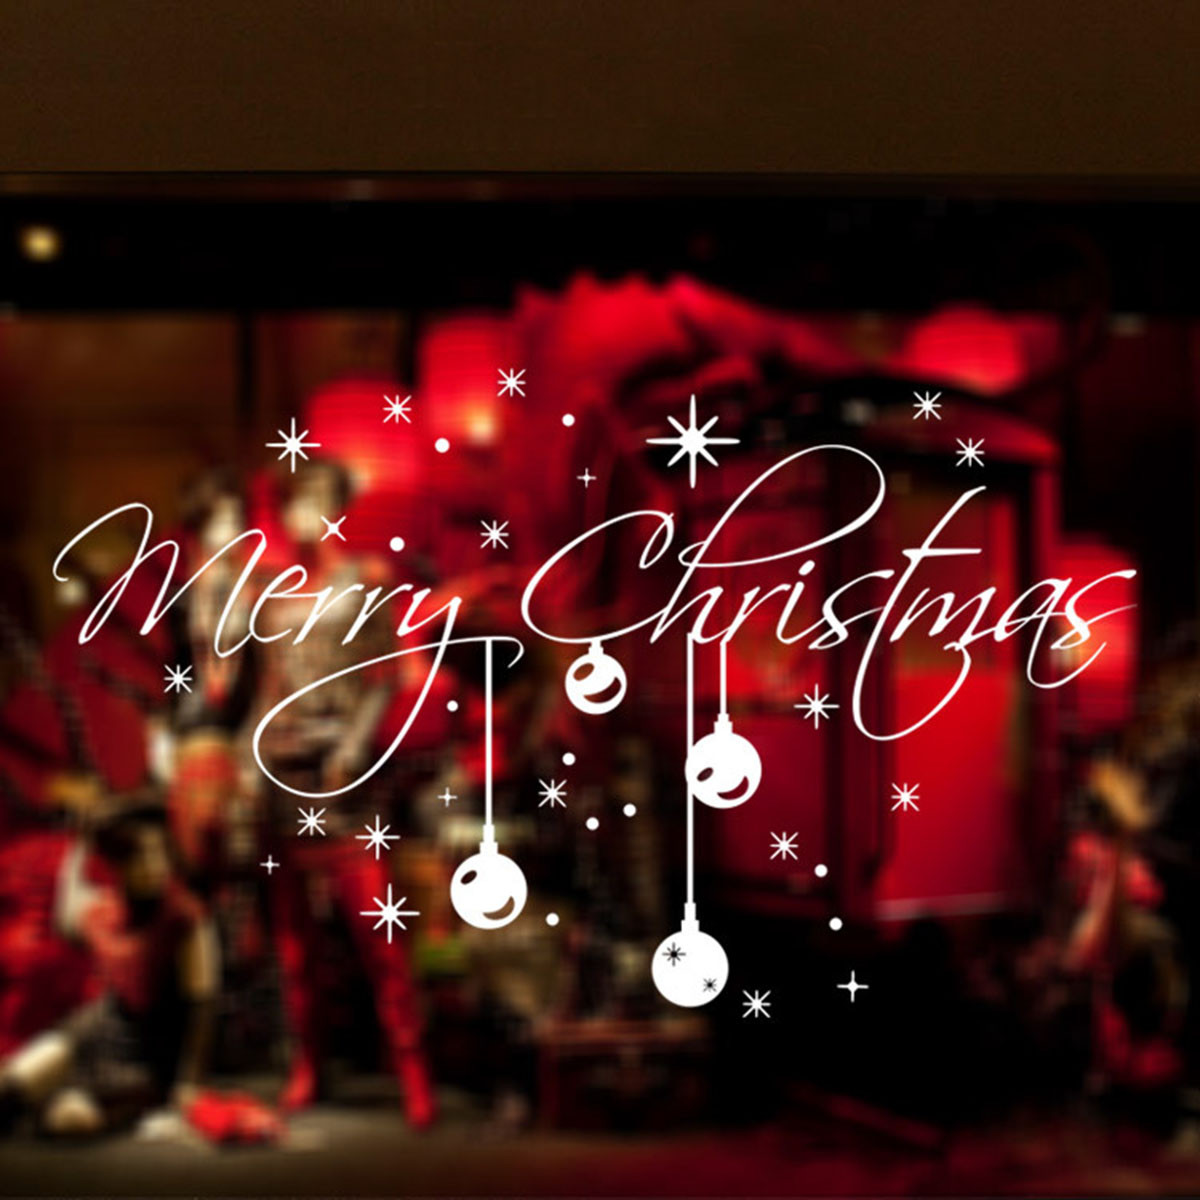 Merry-Christmas-Snowflake-Window-Wall-Sticker-Wall-Window-Decoration-1004664-2